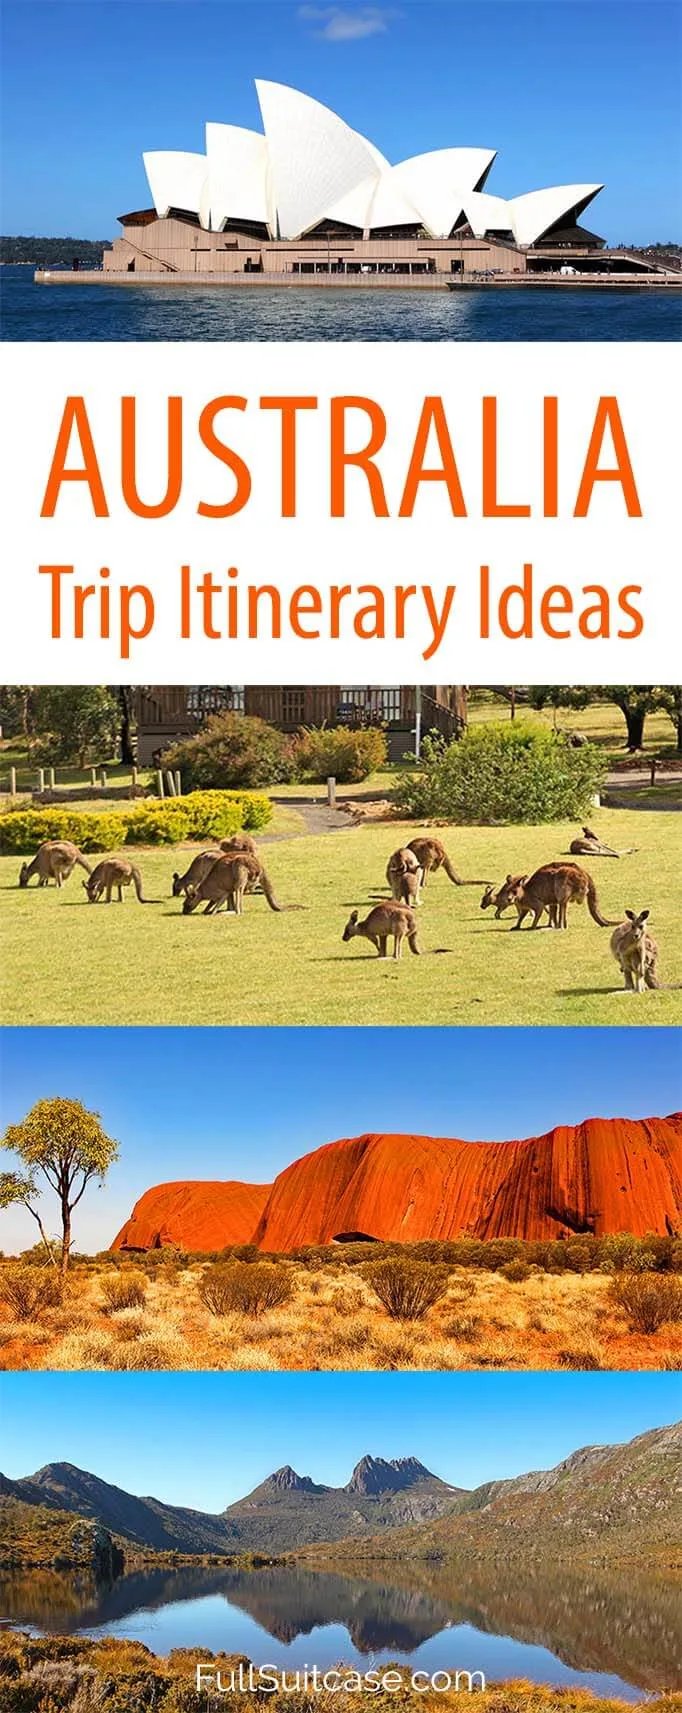 Australia trip itinerary ideas